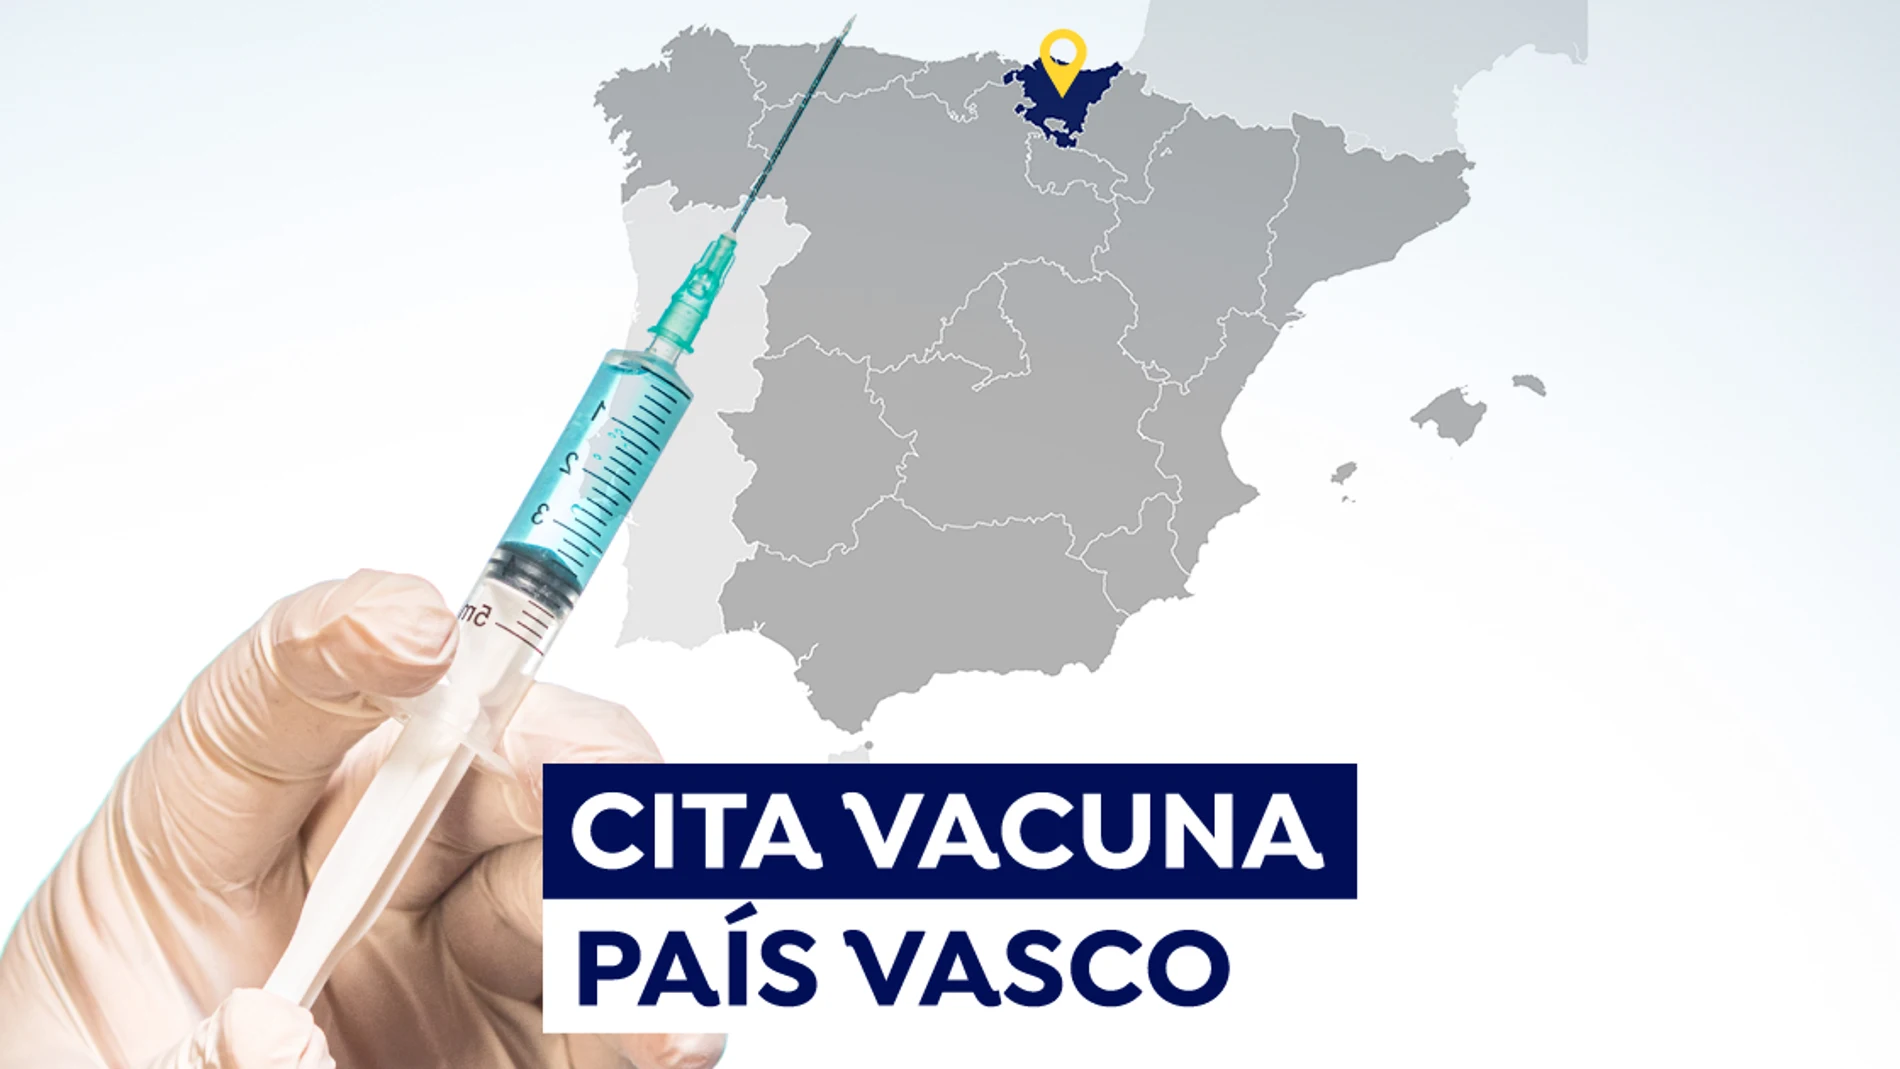 Cómo pedir cita para la vacuna covid País Vasco, anular o modificar tu cita